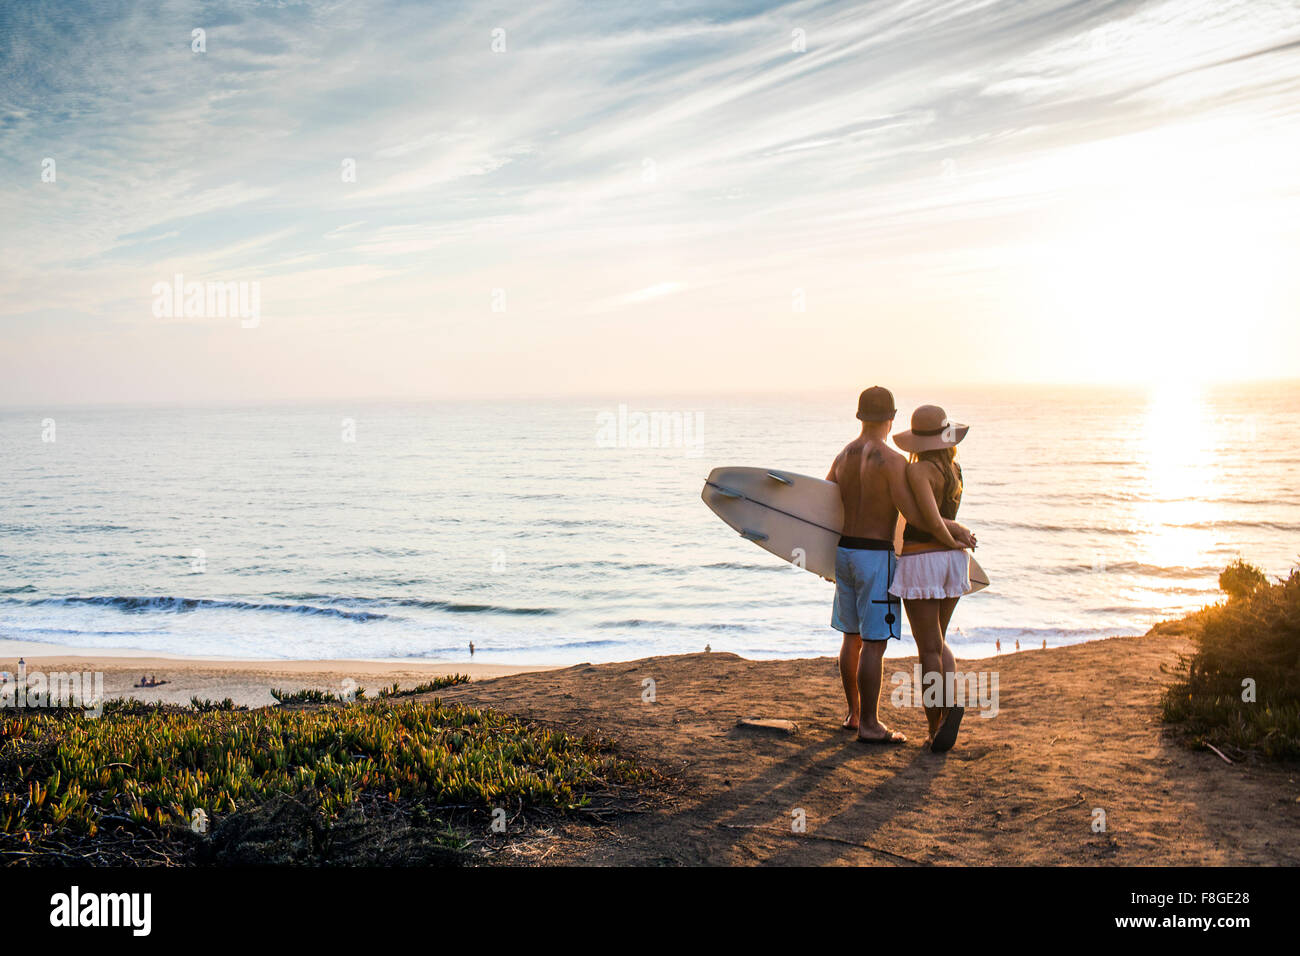 Caucasian couple admiring seascape at beach Banque D'Images